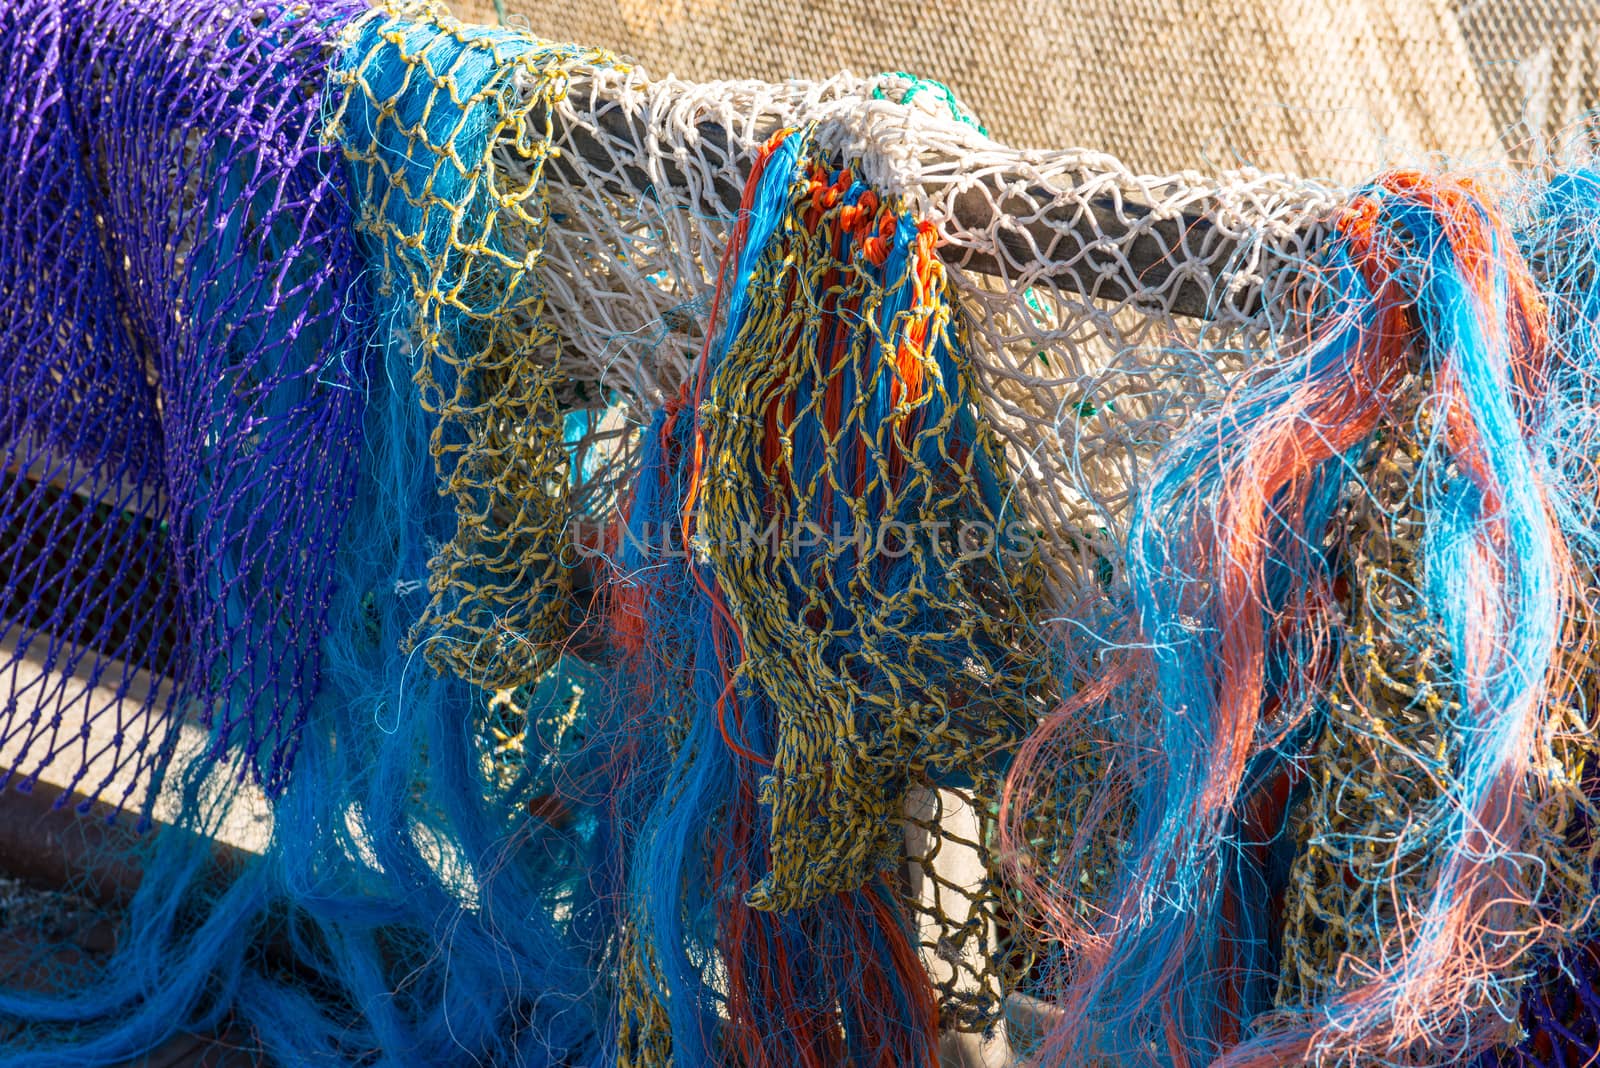 Colored fishing nets in a Dutch fishing port
